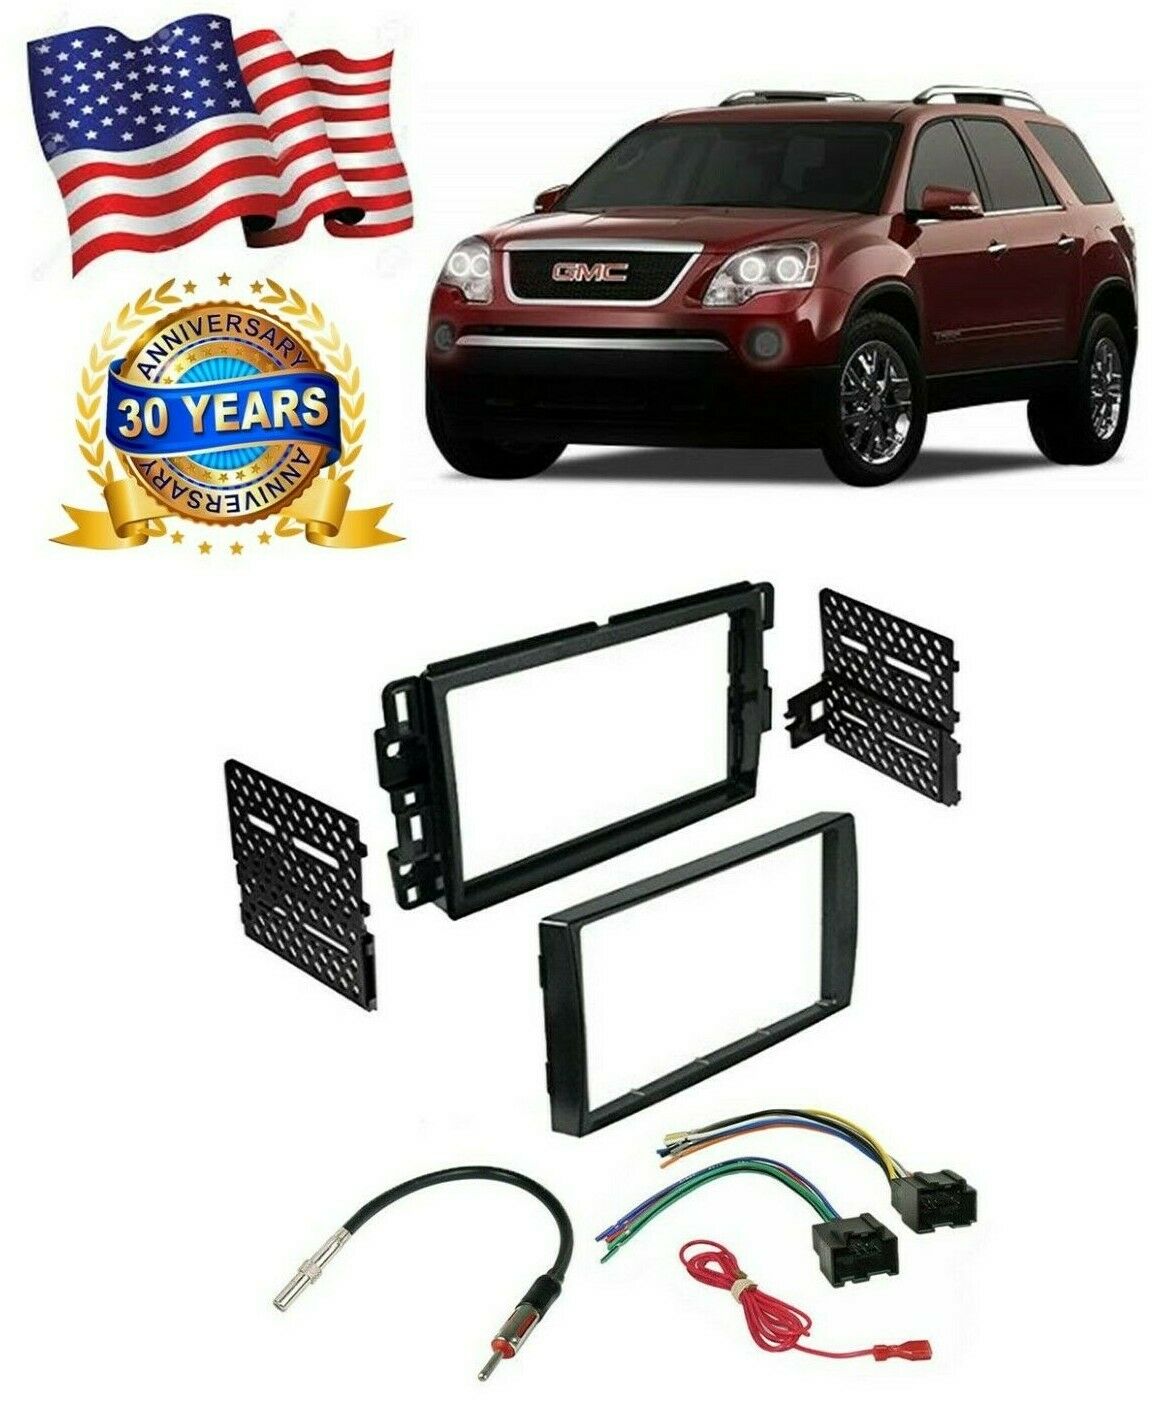 American International Car Stereo 2Din Dash Kit Harness for 2006-16 Buick Chevrolet GMC Pontiac